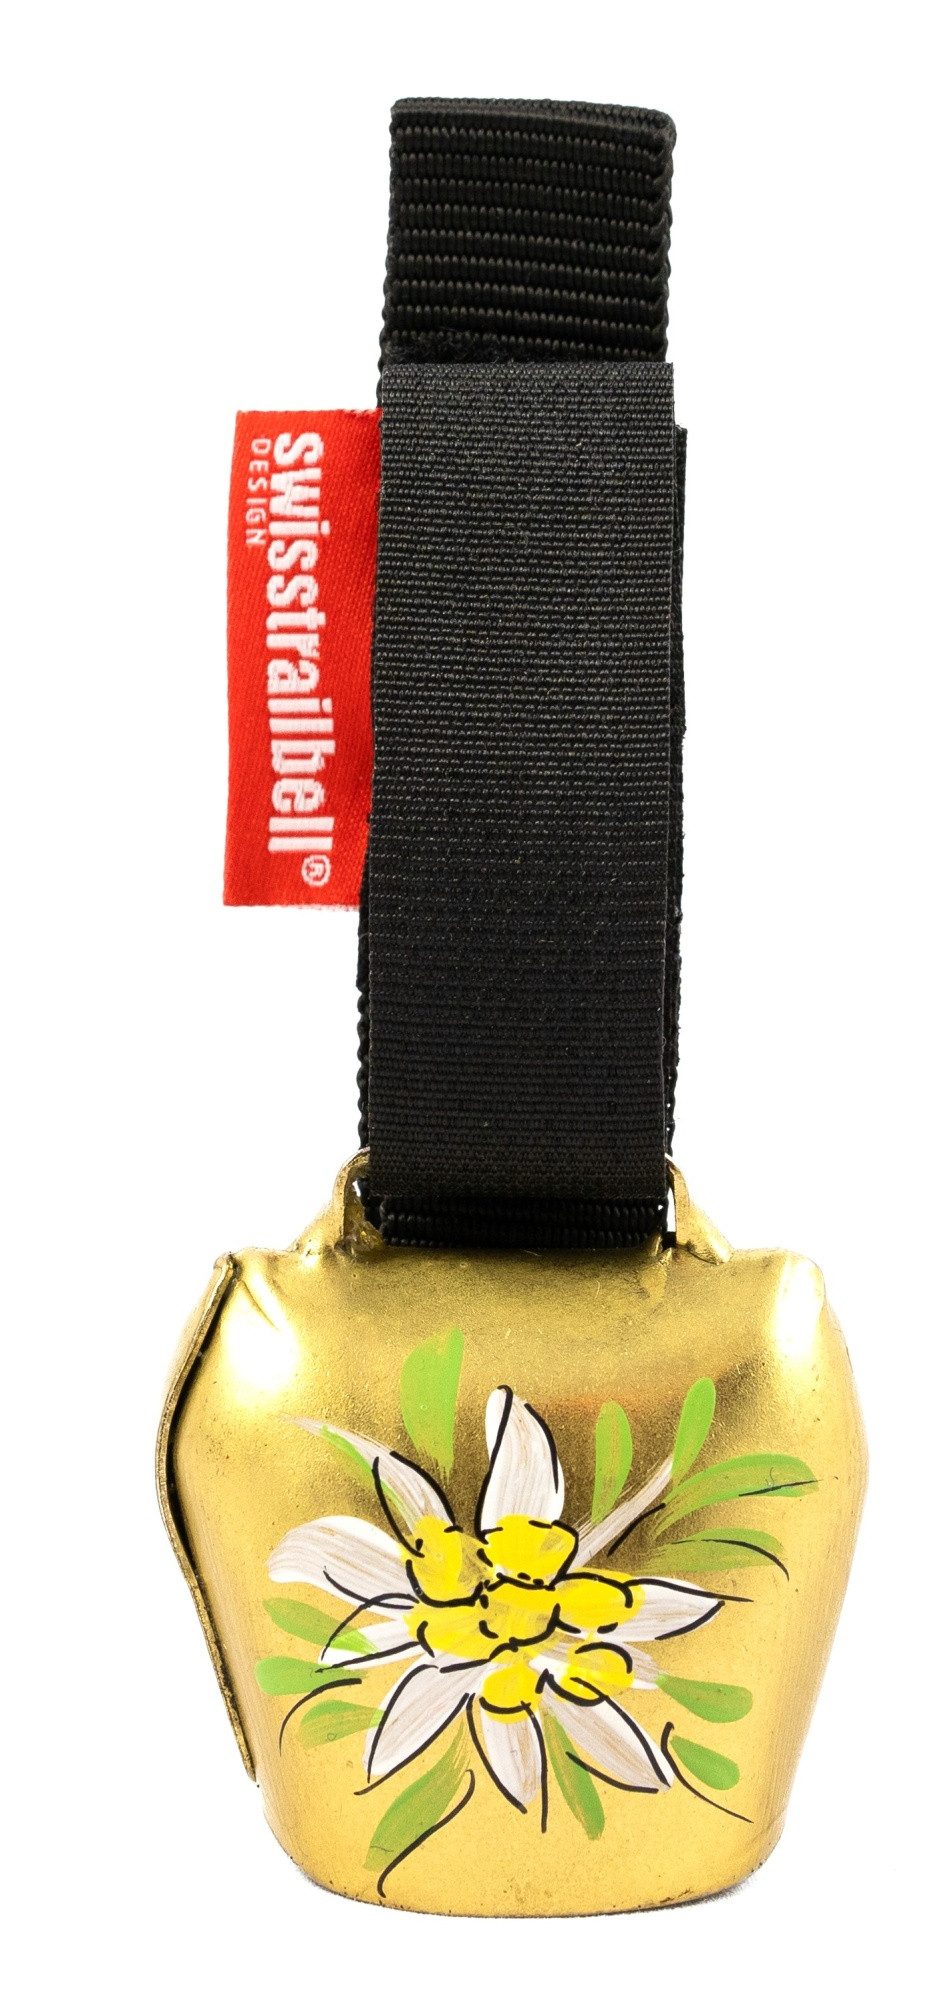 swisstrailbell Fahrradklingel Edition Messing-Gold mit Alpen Edelweiß, Trailbell, Bear Bell